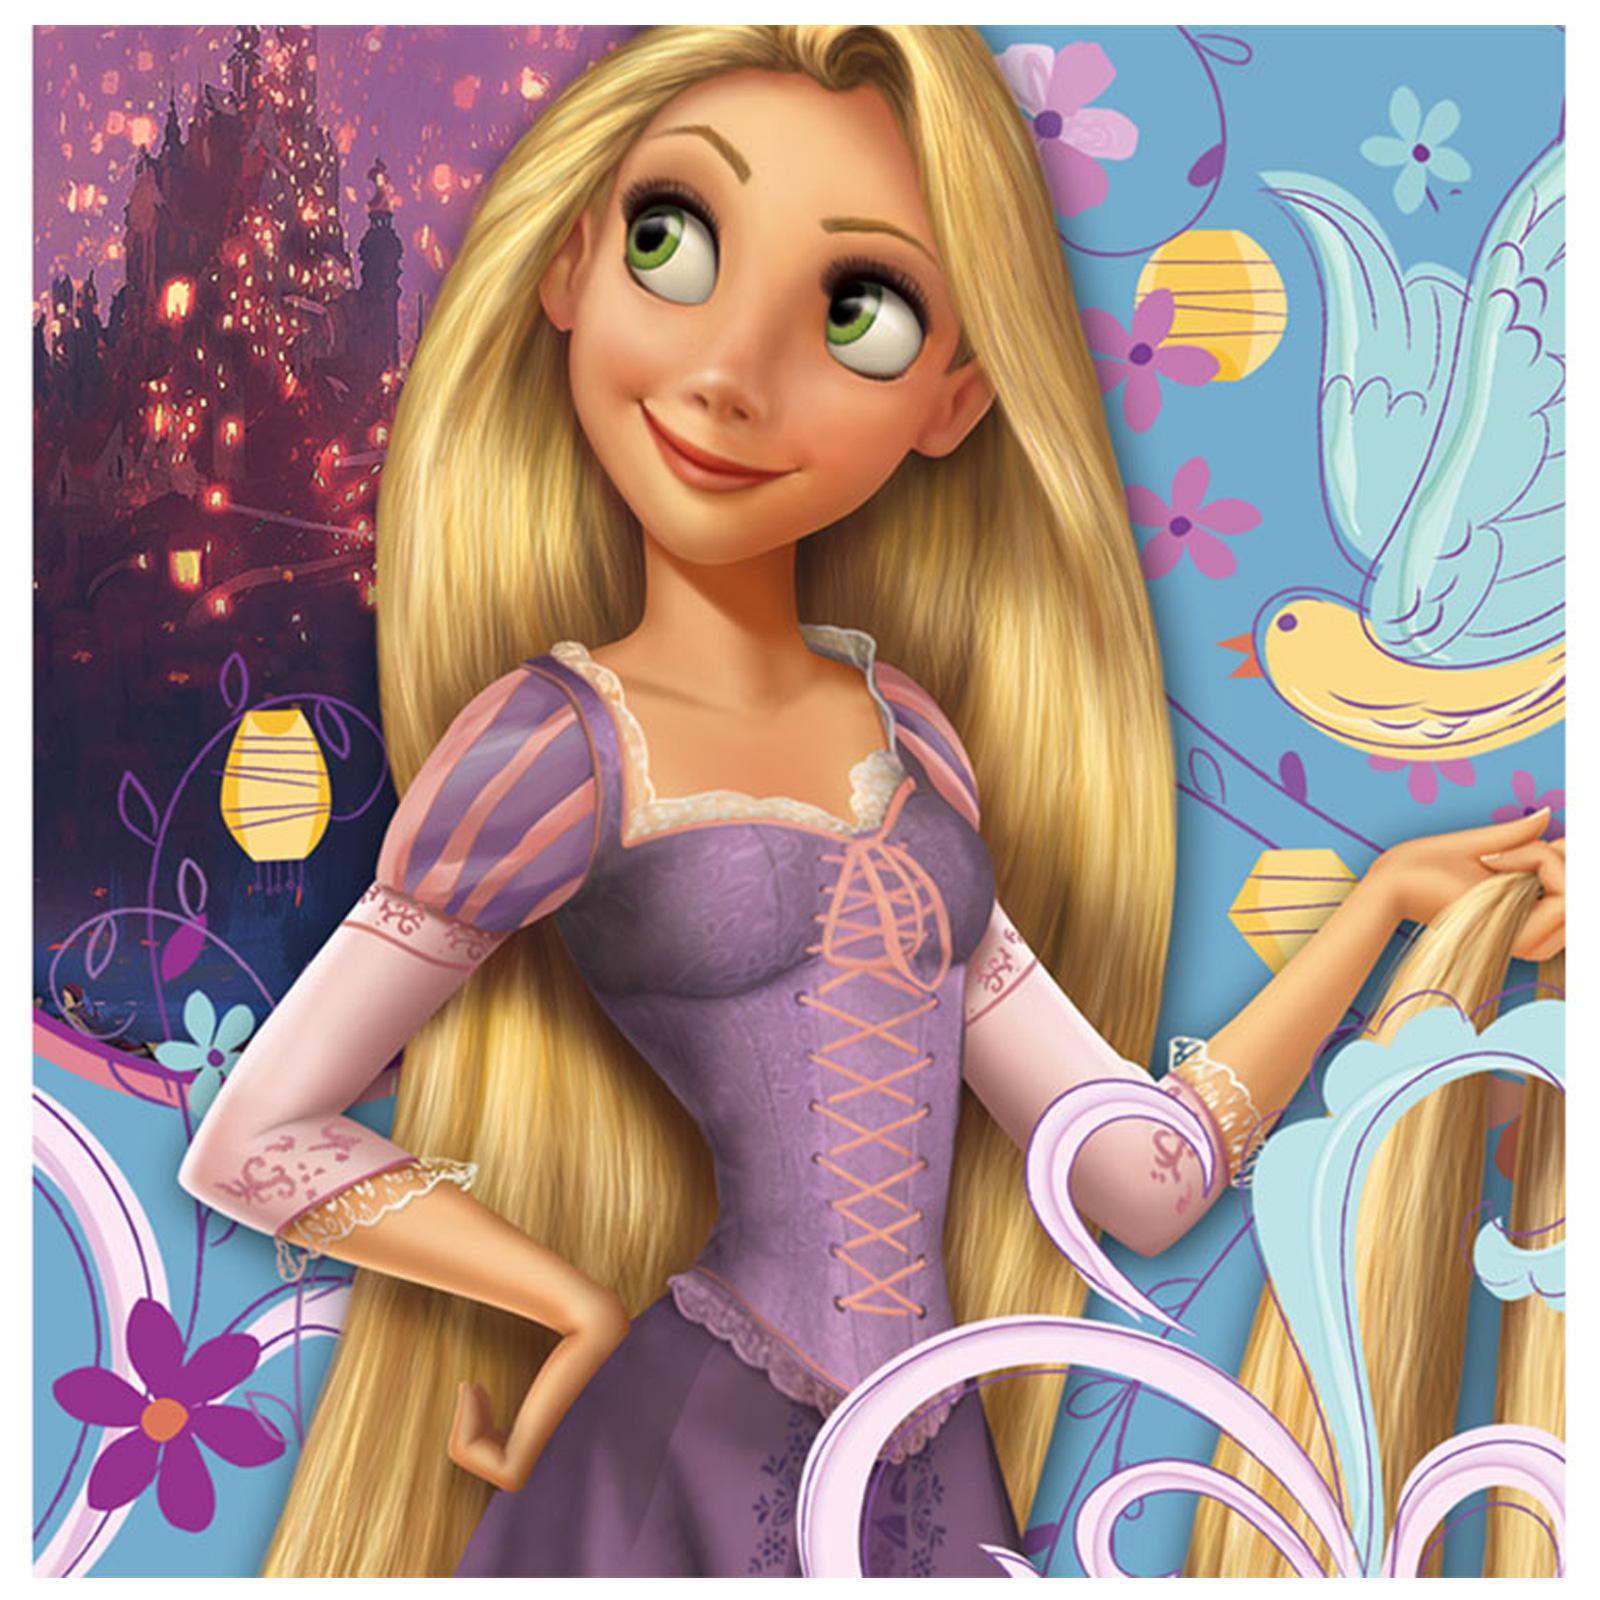 Disneys Tangled Wallpaper Image for iPhone